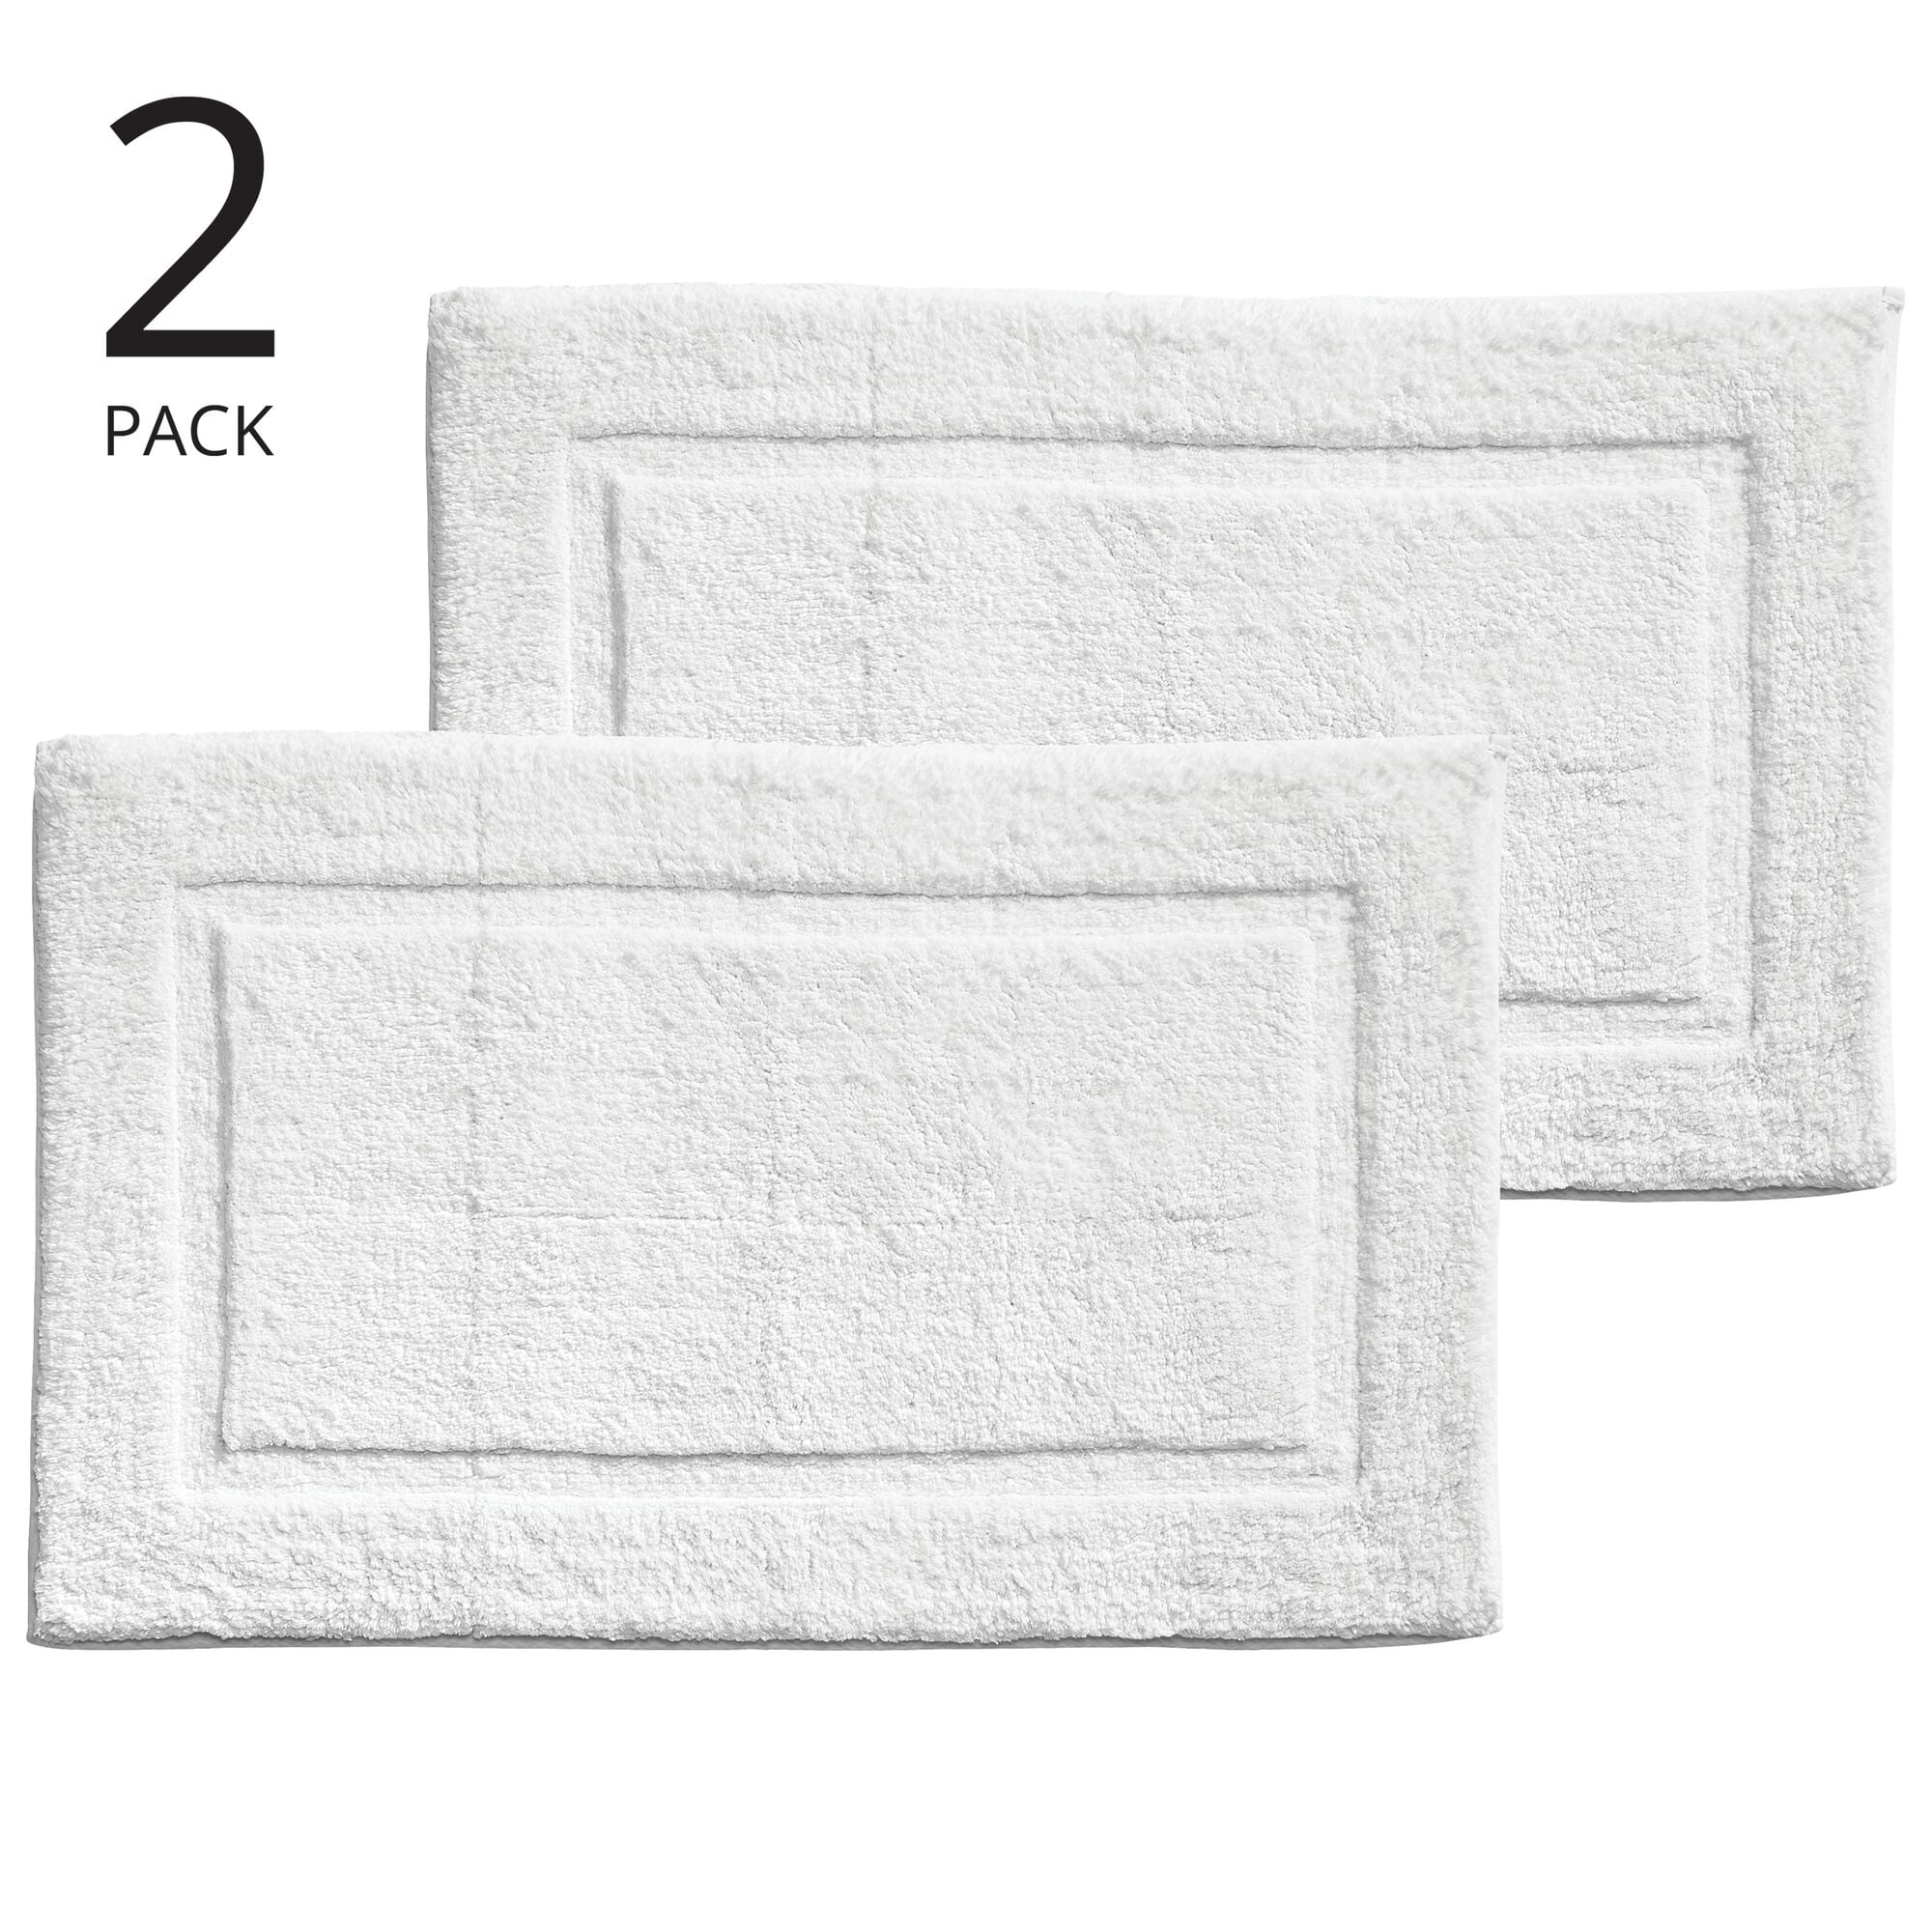 5 Star Hotel Cotton Floor Towel Bath Mat with Cobble Pattern 50pcs pack